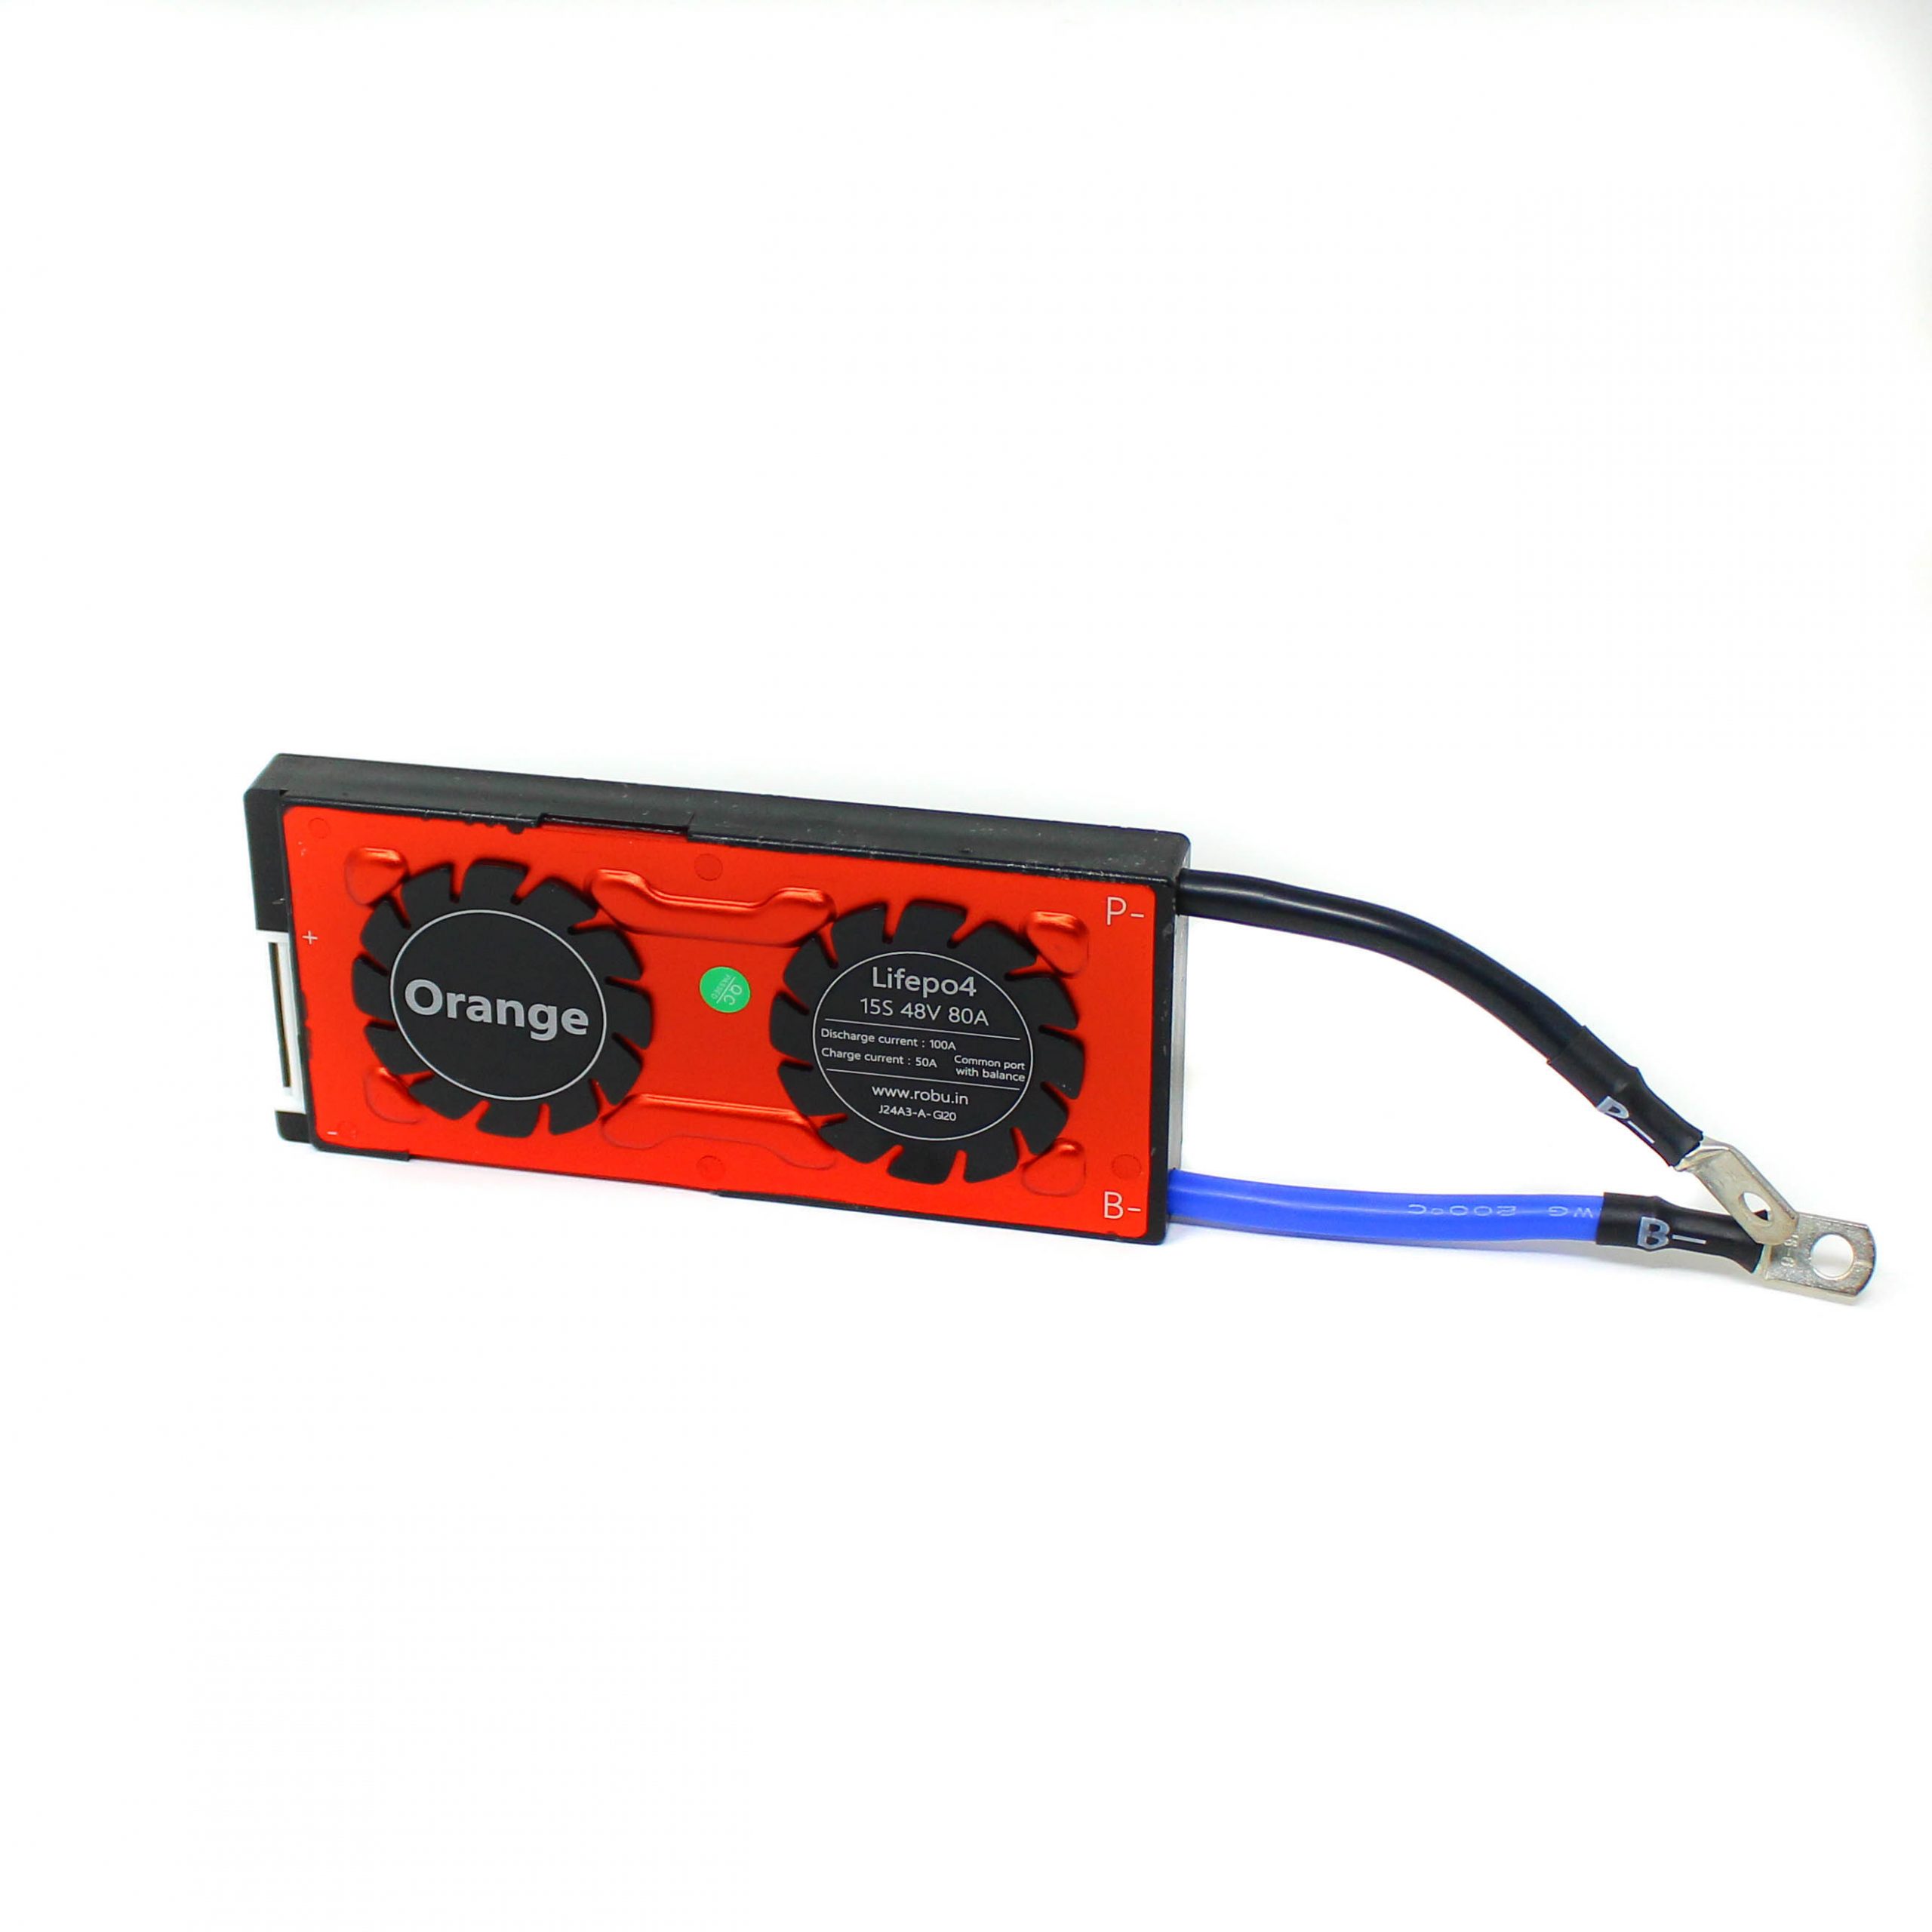 Orange Lifepo4 15S 48V 80A Battery Management System